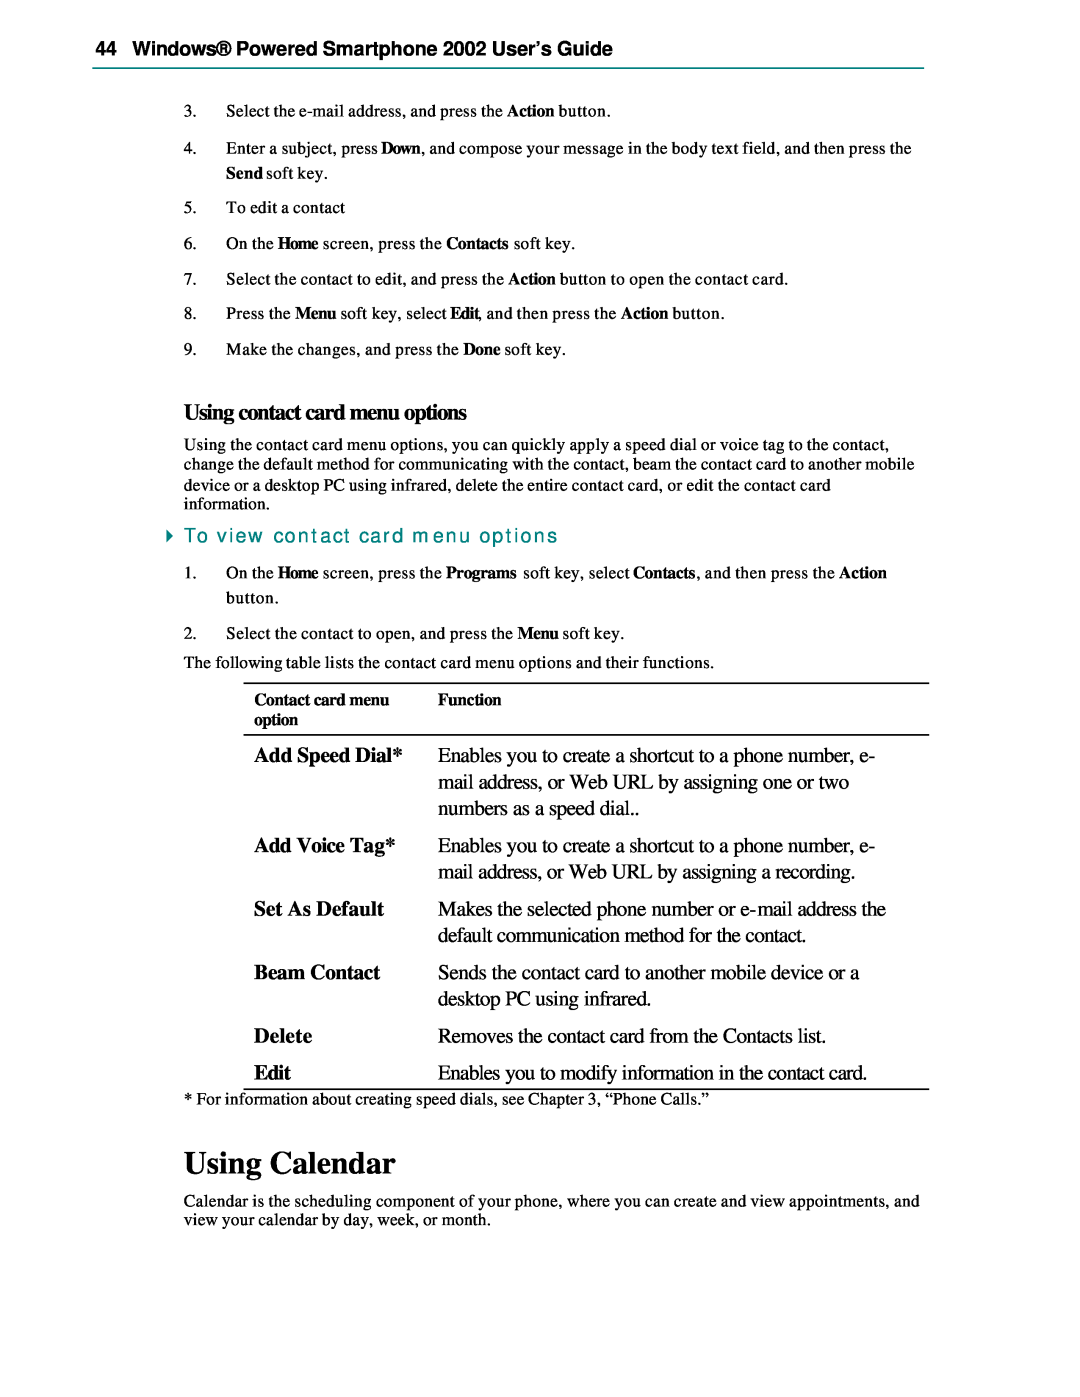 Microsoft Smartphone 2002 manual Using Calendar, Using contact card menu options 